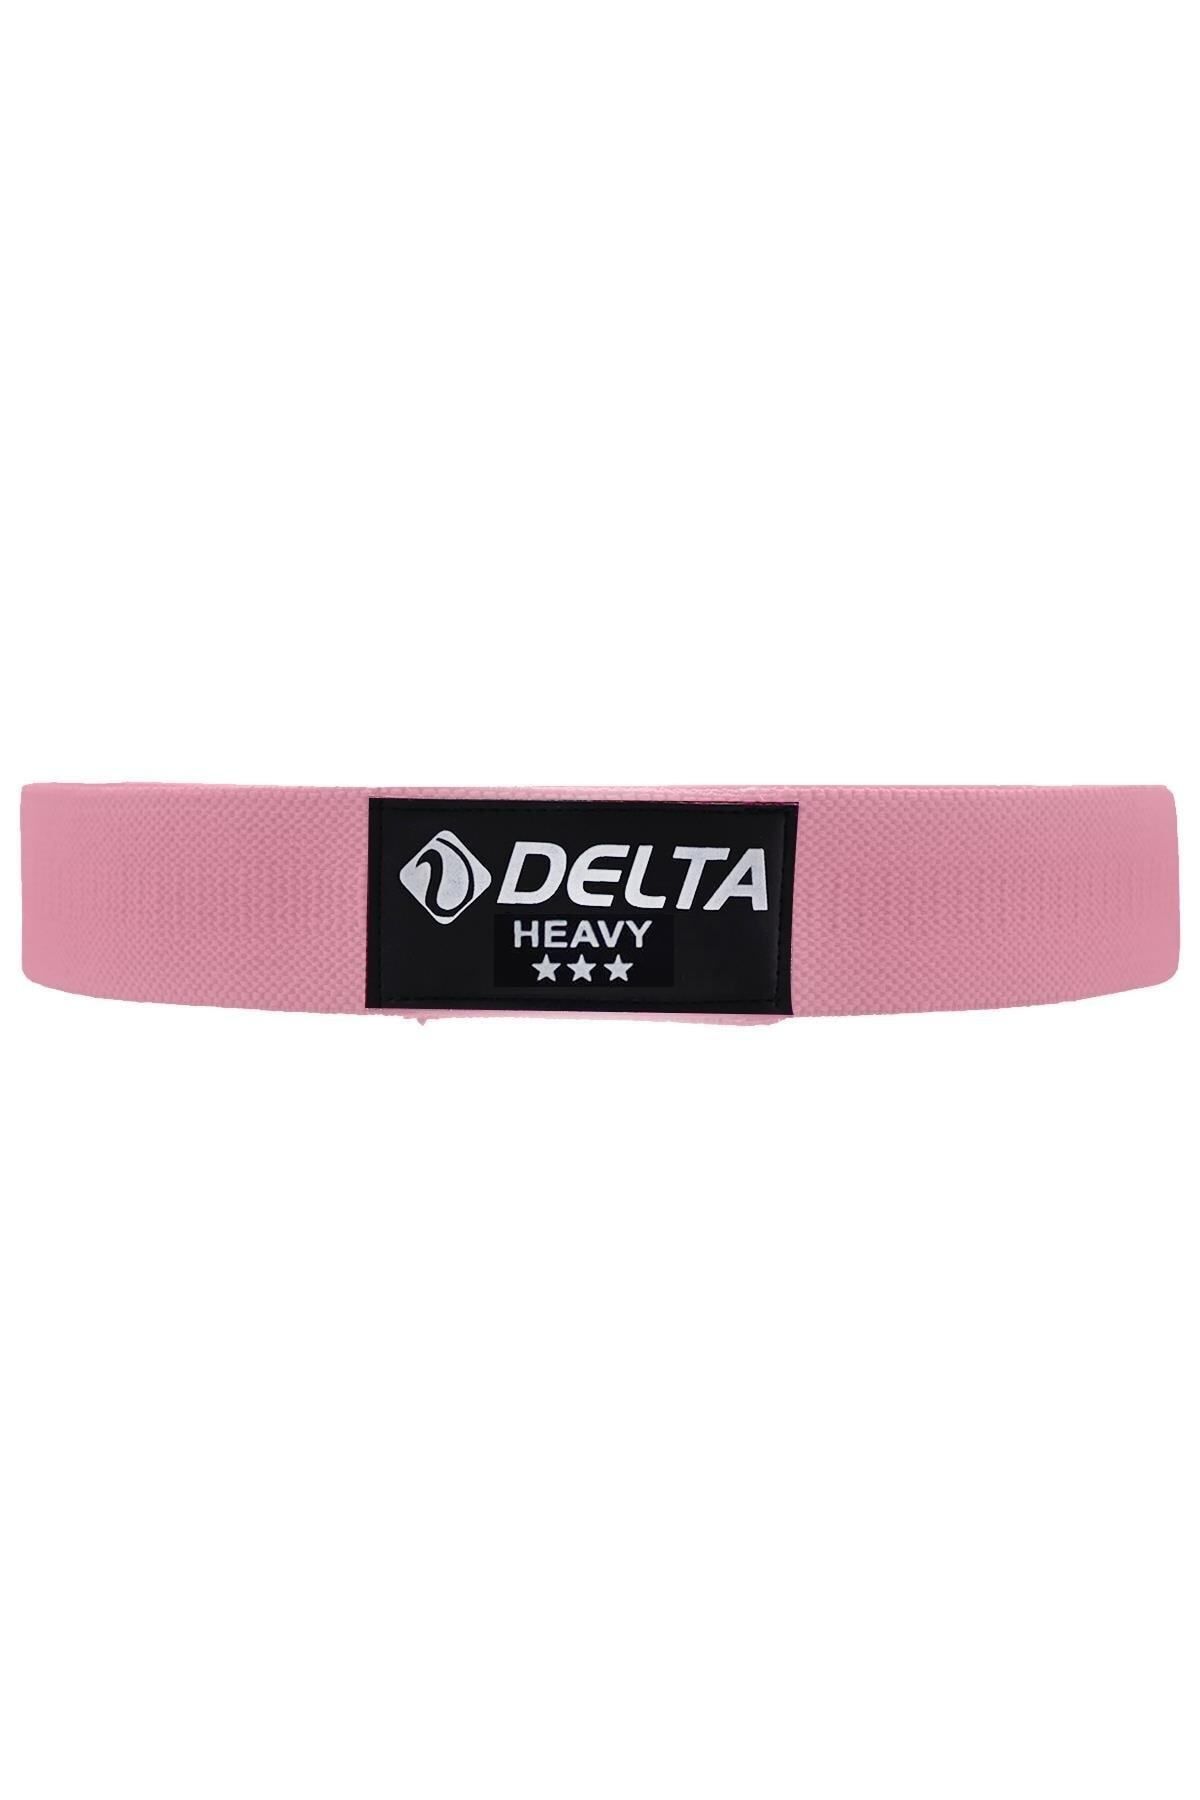 Delta Tam Sert Squat Bant Pilates Fitness Kalça Egzersizi Direnç Bandı Lastiği (Uç Kısmı Kapalı)